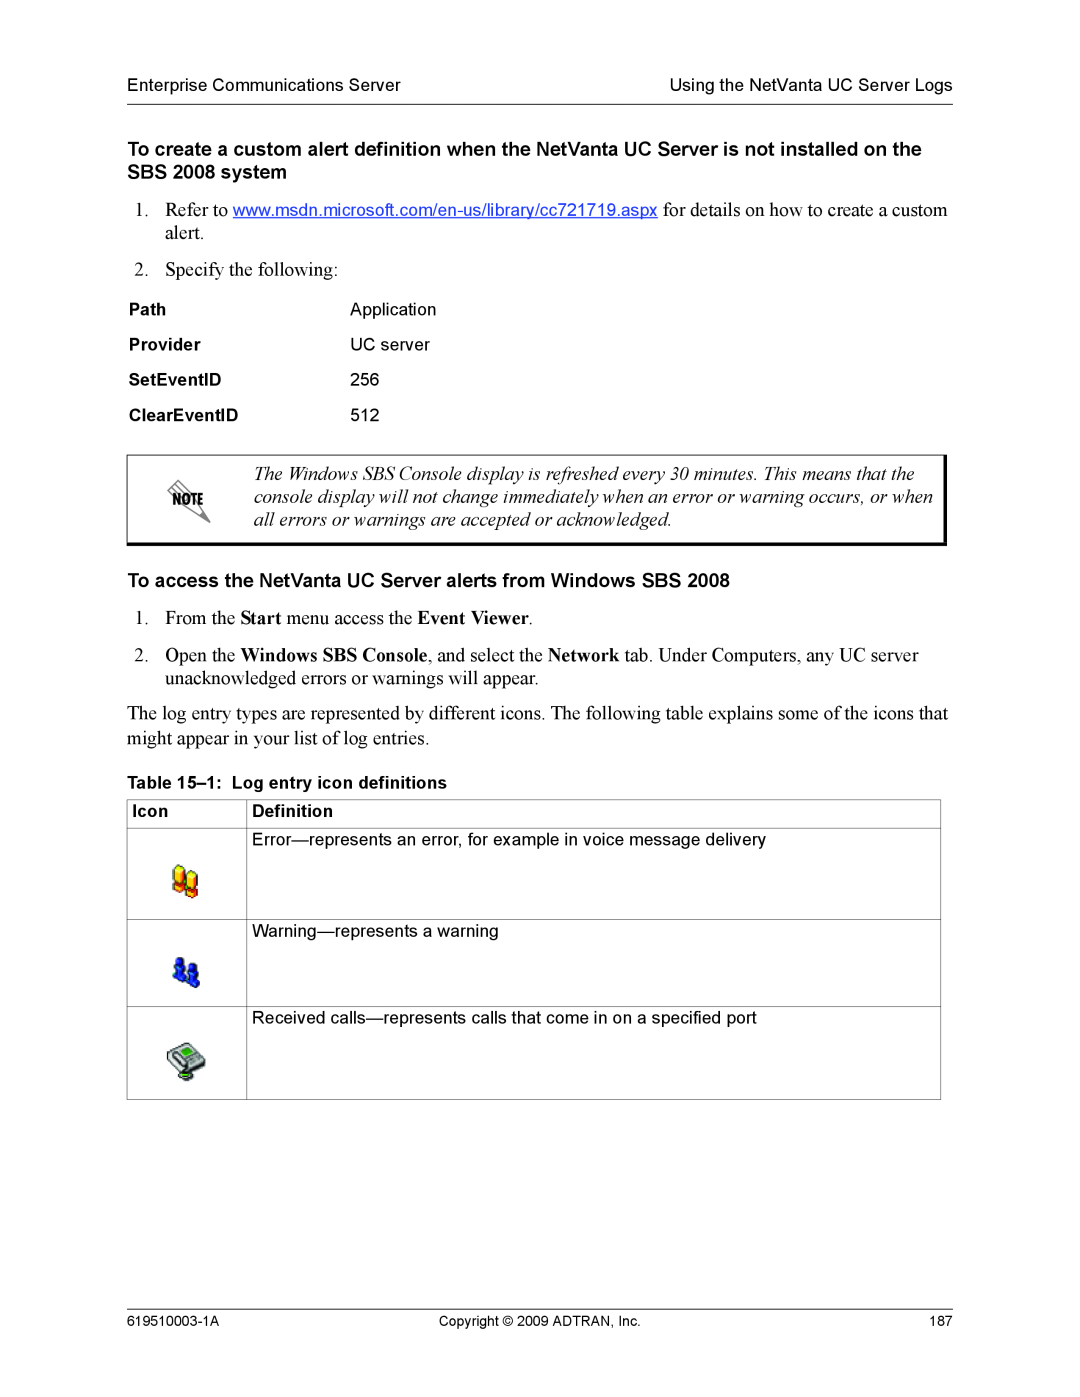 ADTRAN 619510003-1A manual To access the NetVanta UC Server alerts from Windows SBS 